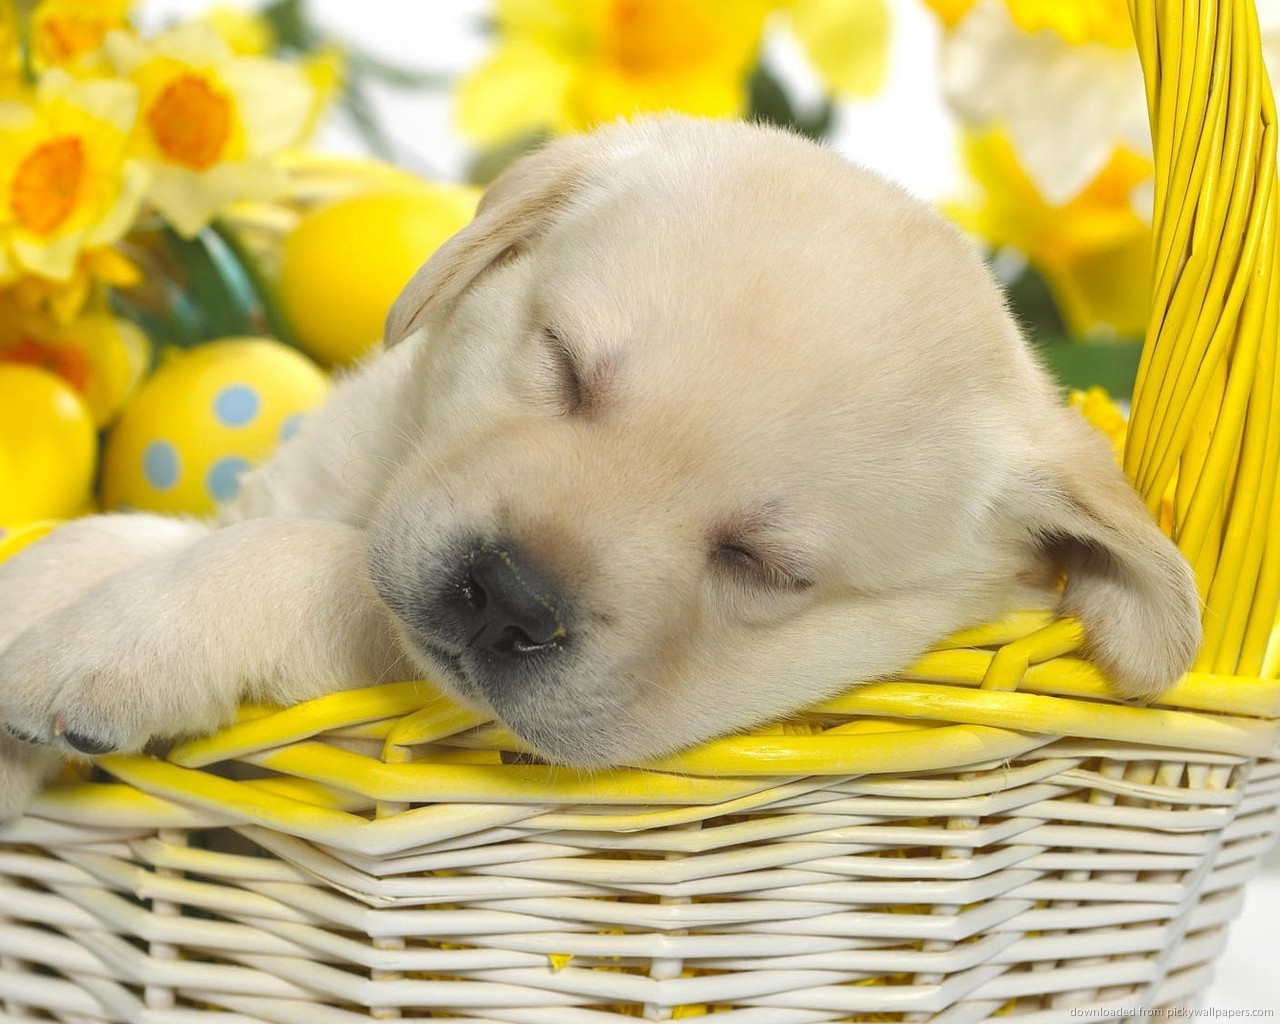 Download 1280x1024 Cute Puppy Sleeping In An Easter Basket Wallpaper